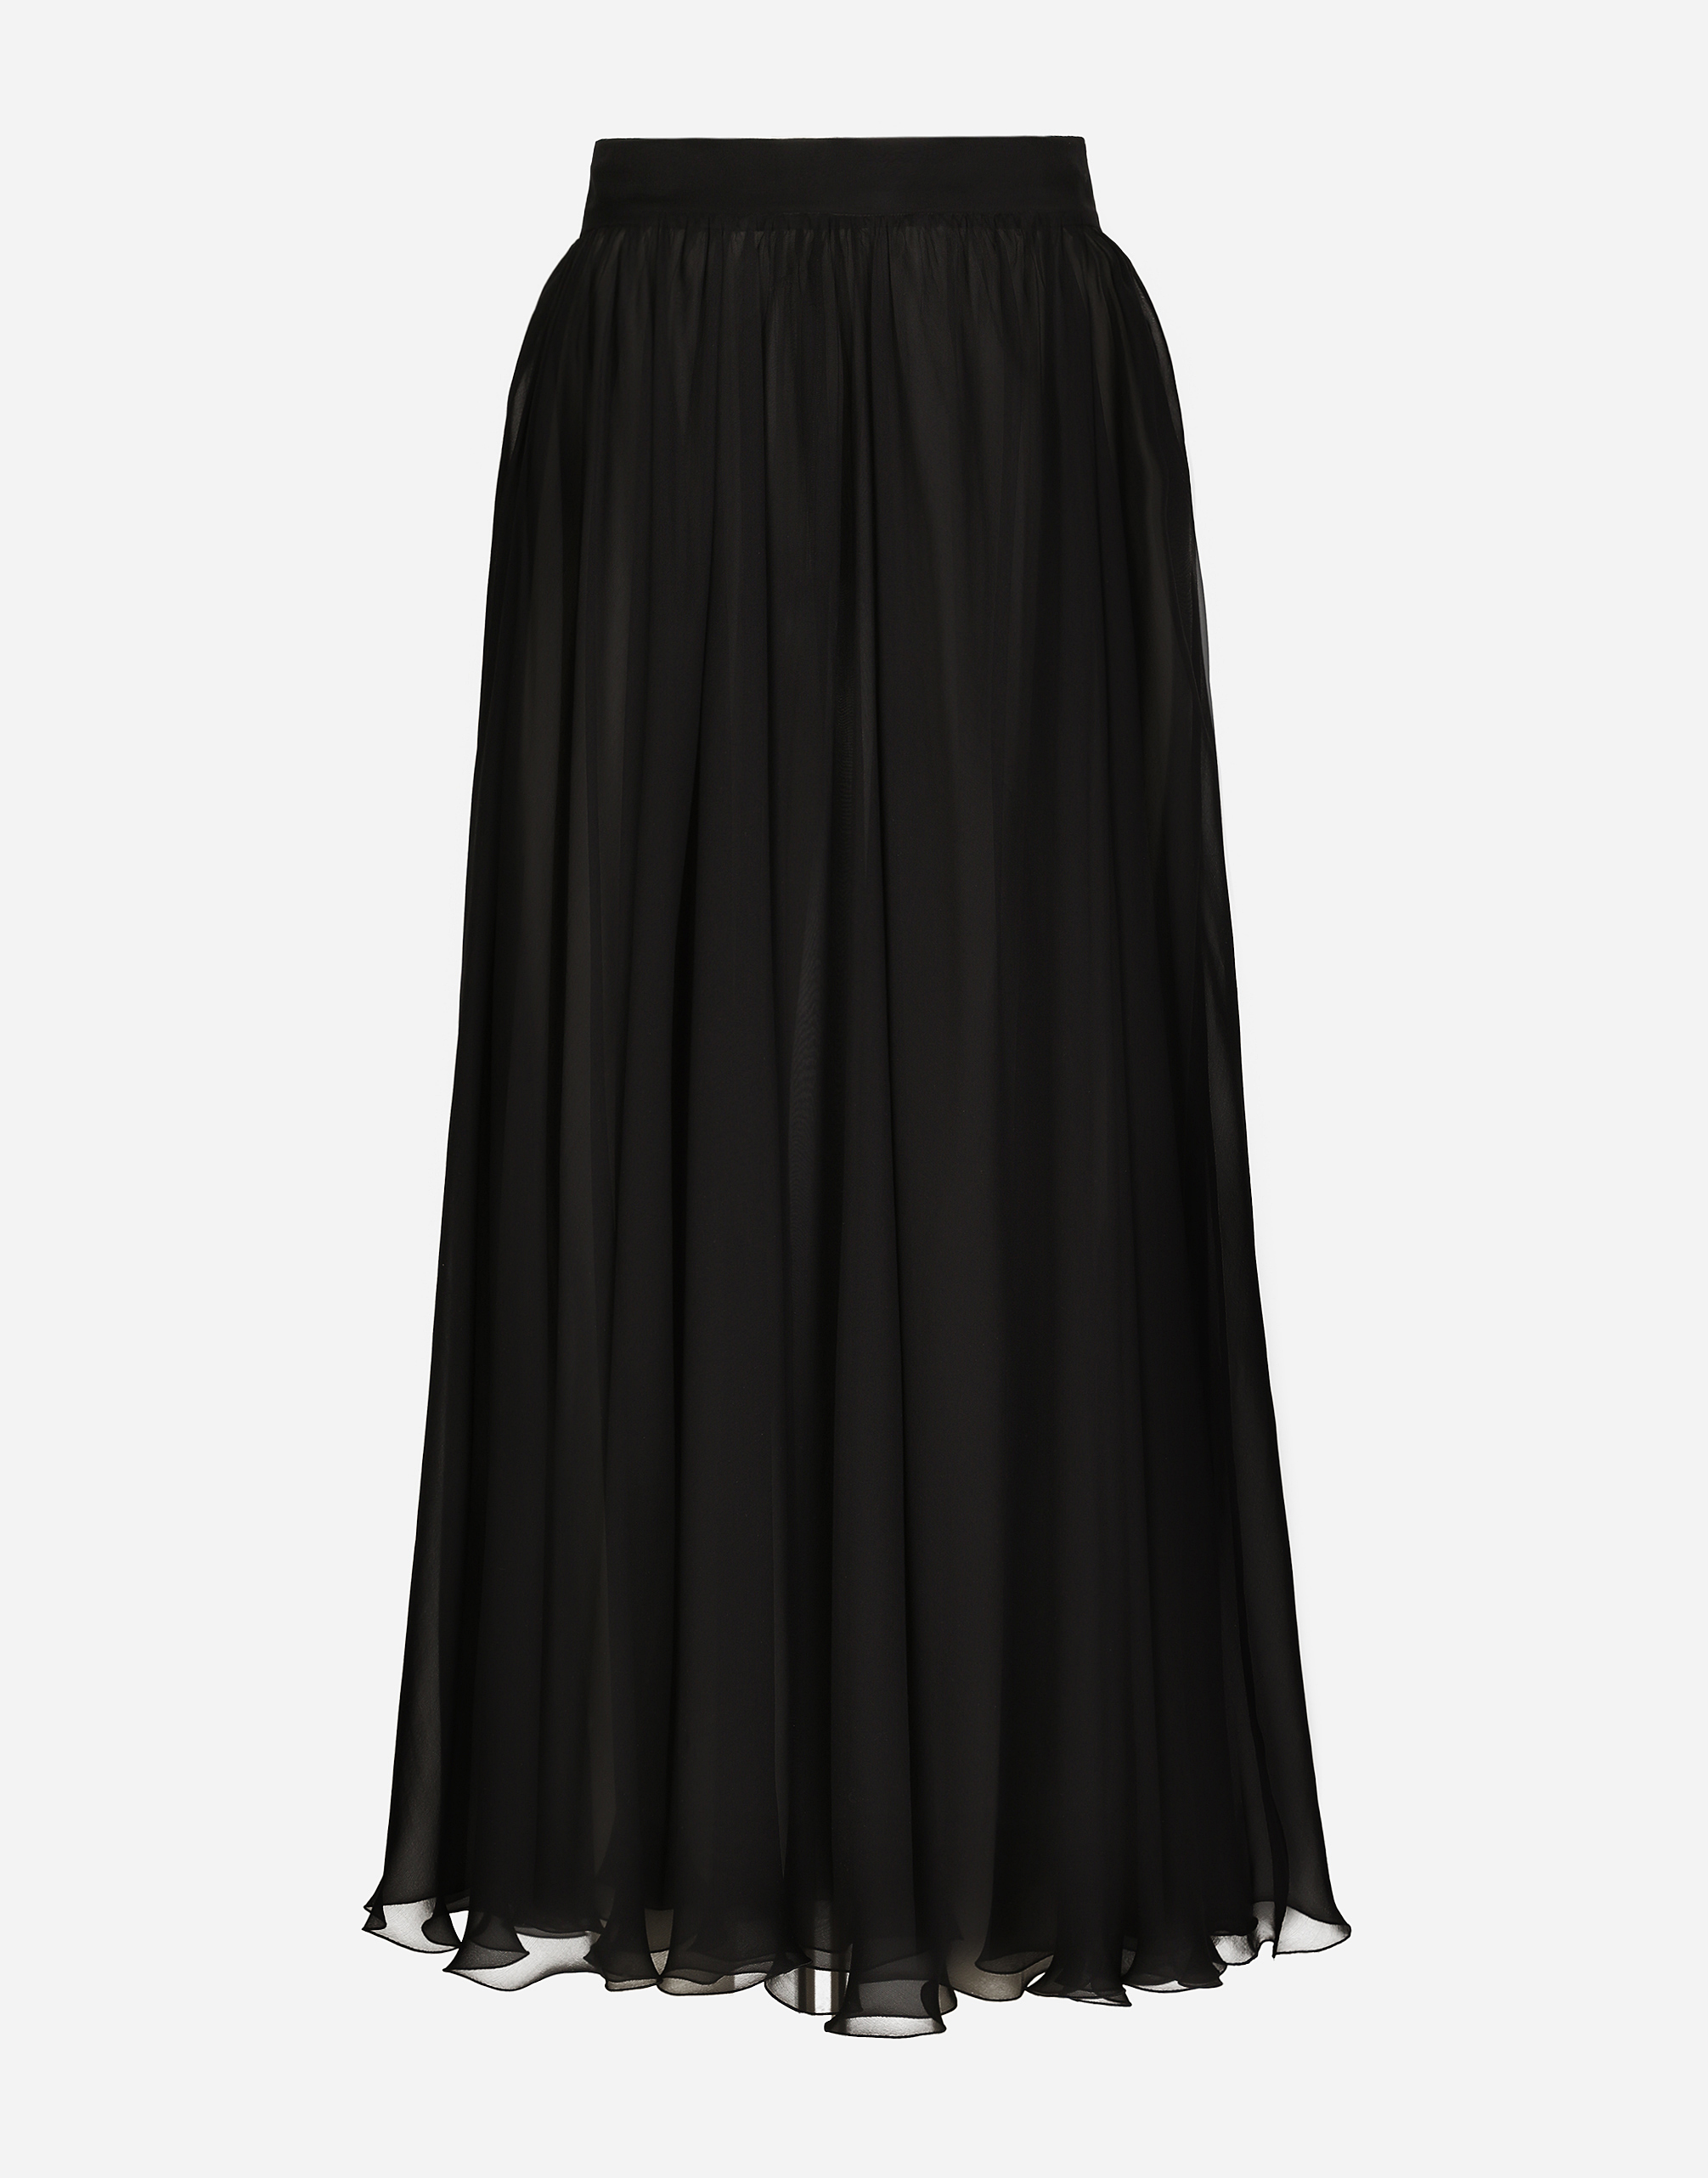 High-waisted chiffon circle skirt in Black